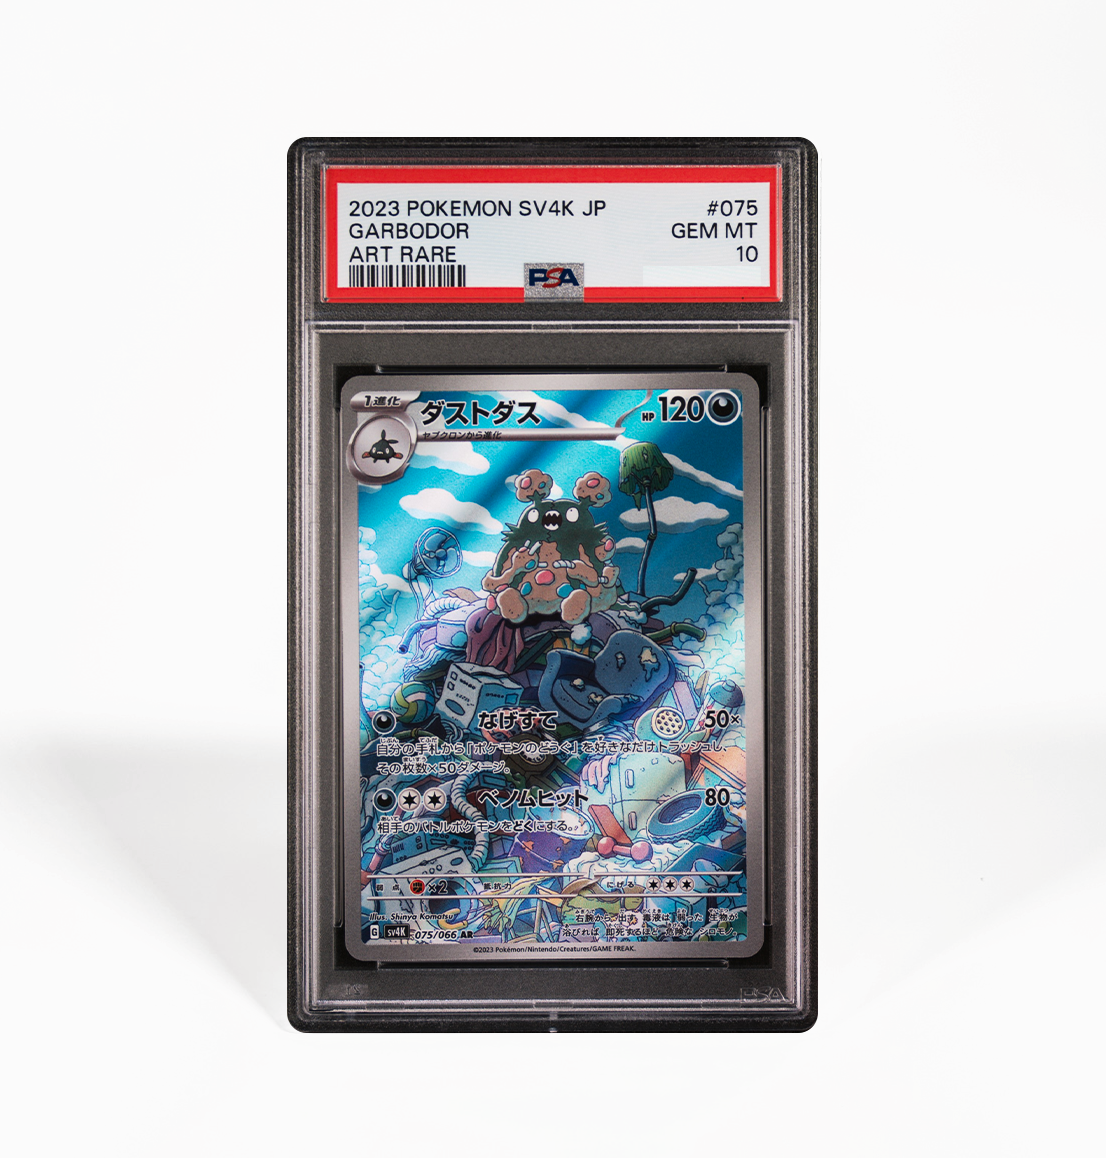 PSA 10 Garbodor #075 Ancient Roar SV4K Japanese Pokemon card